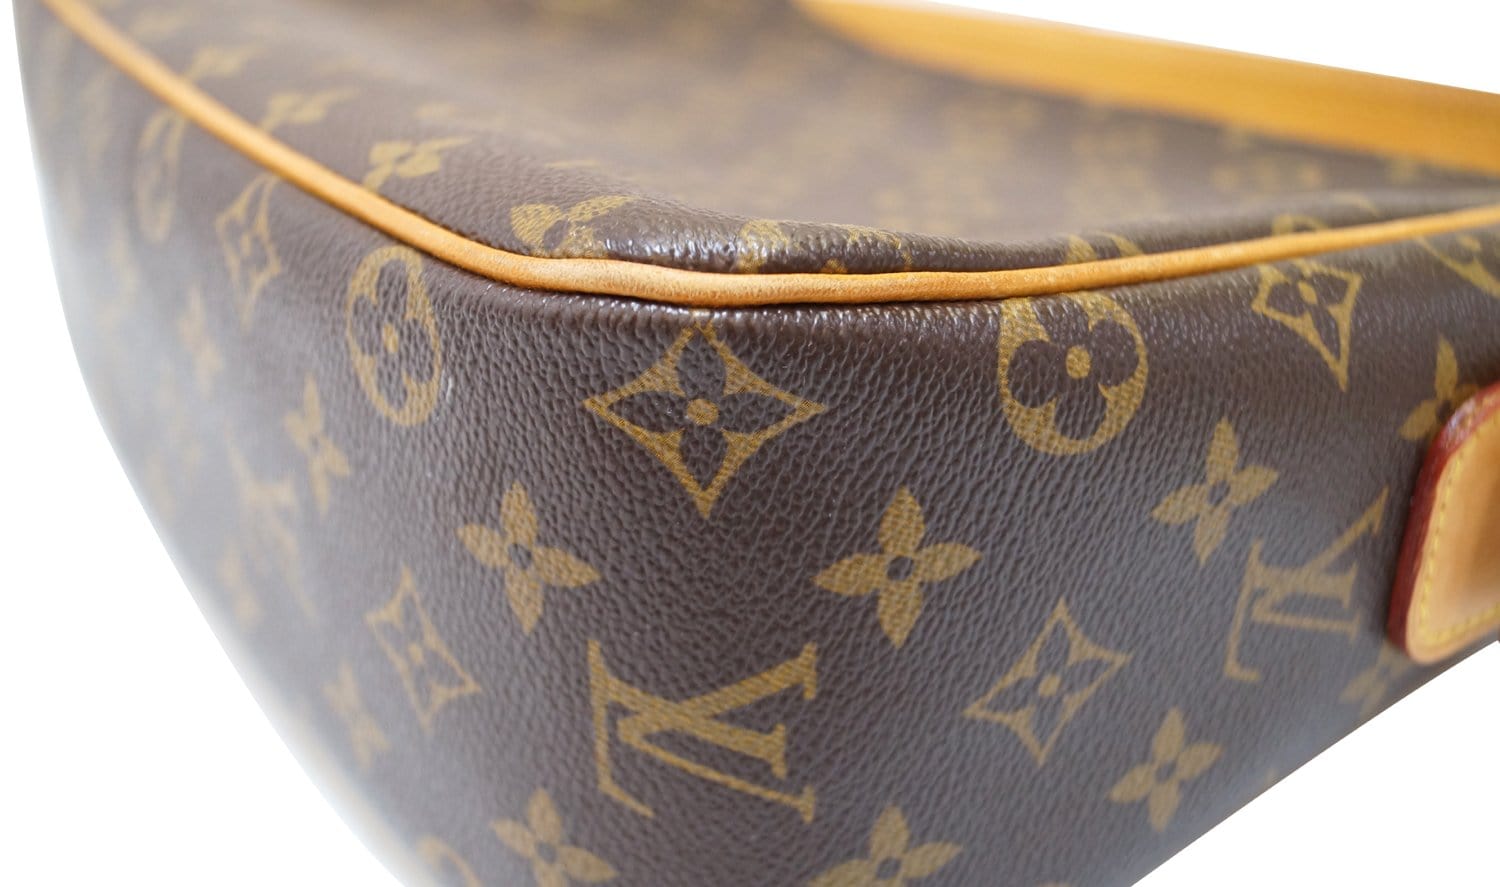 Brown Louis Vuitton Monogram Multipli-Cite Tote Bag